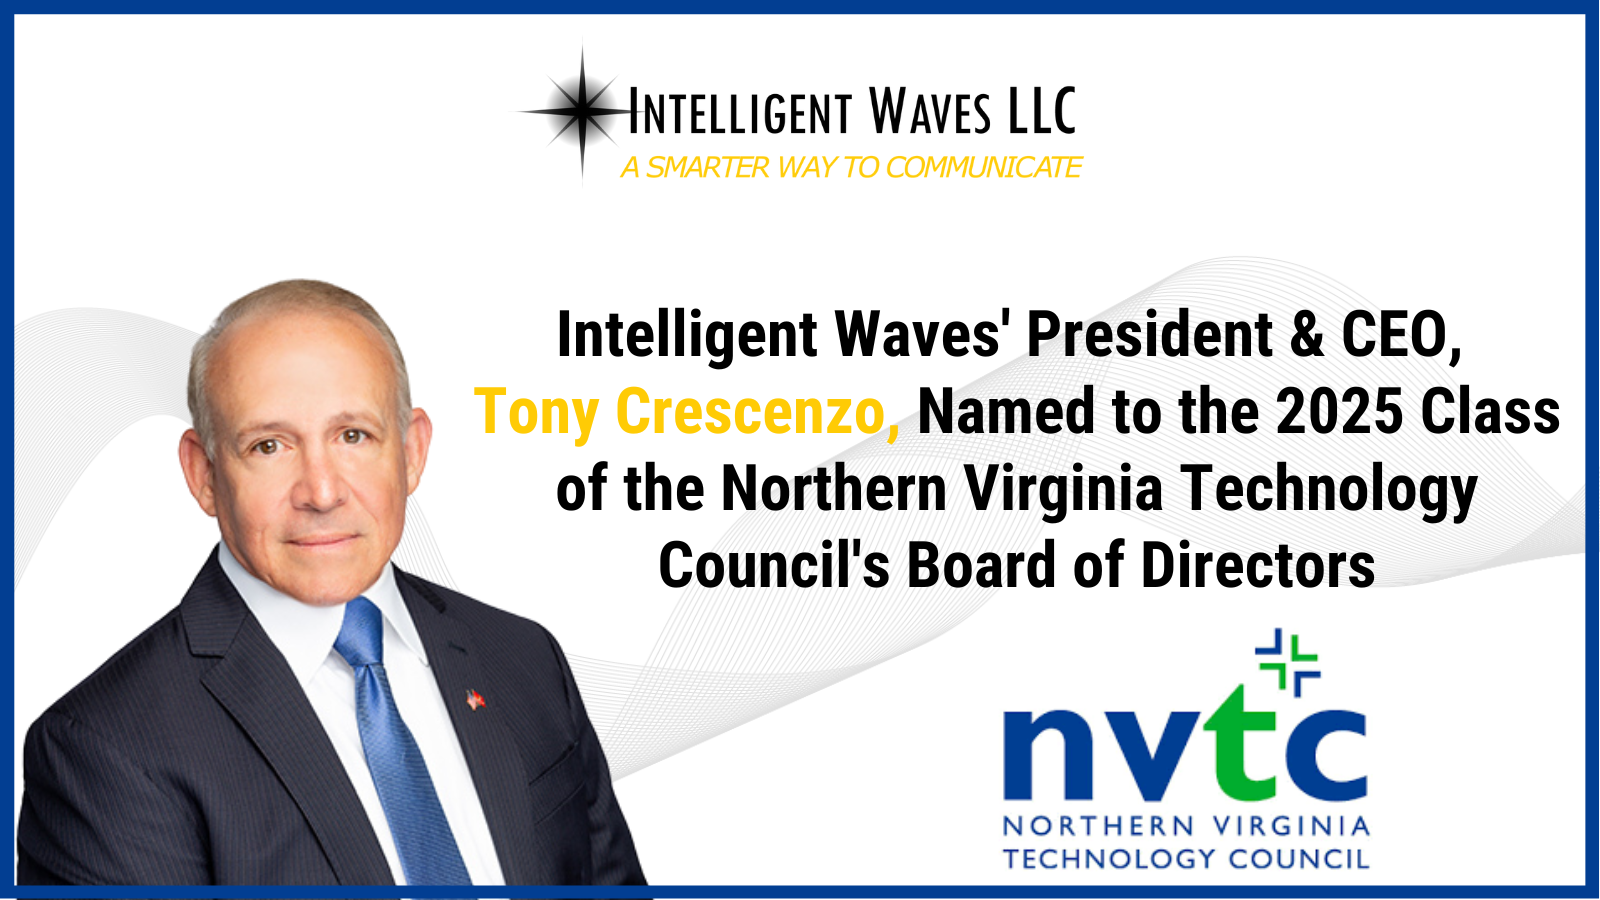 Tony Crescenzo - NVTC Board of Directors 2025 Class